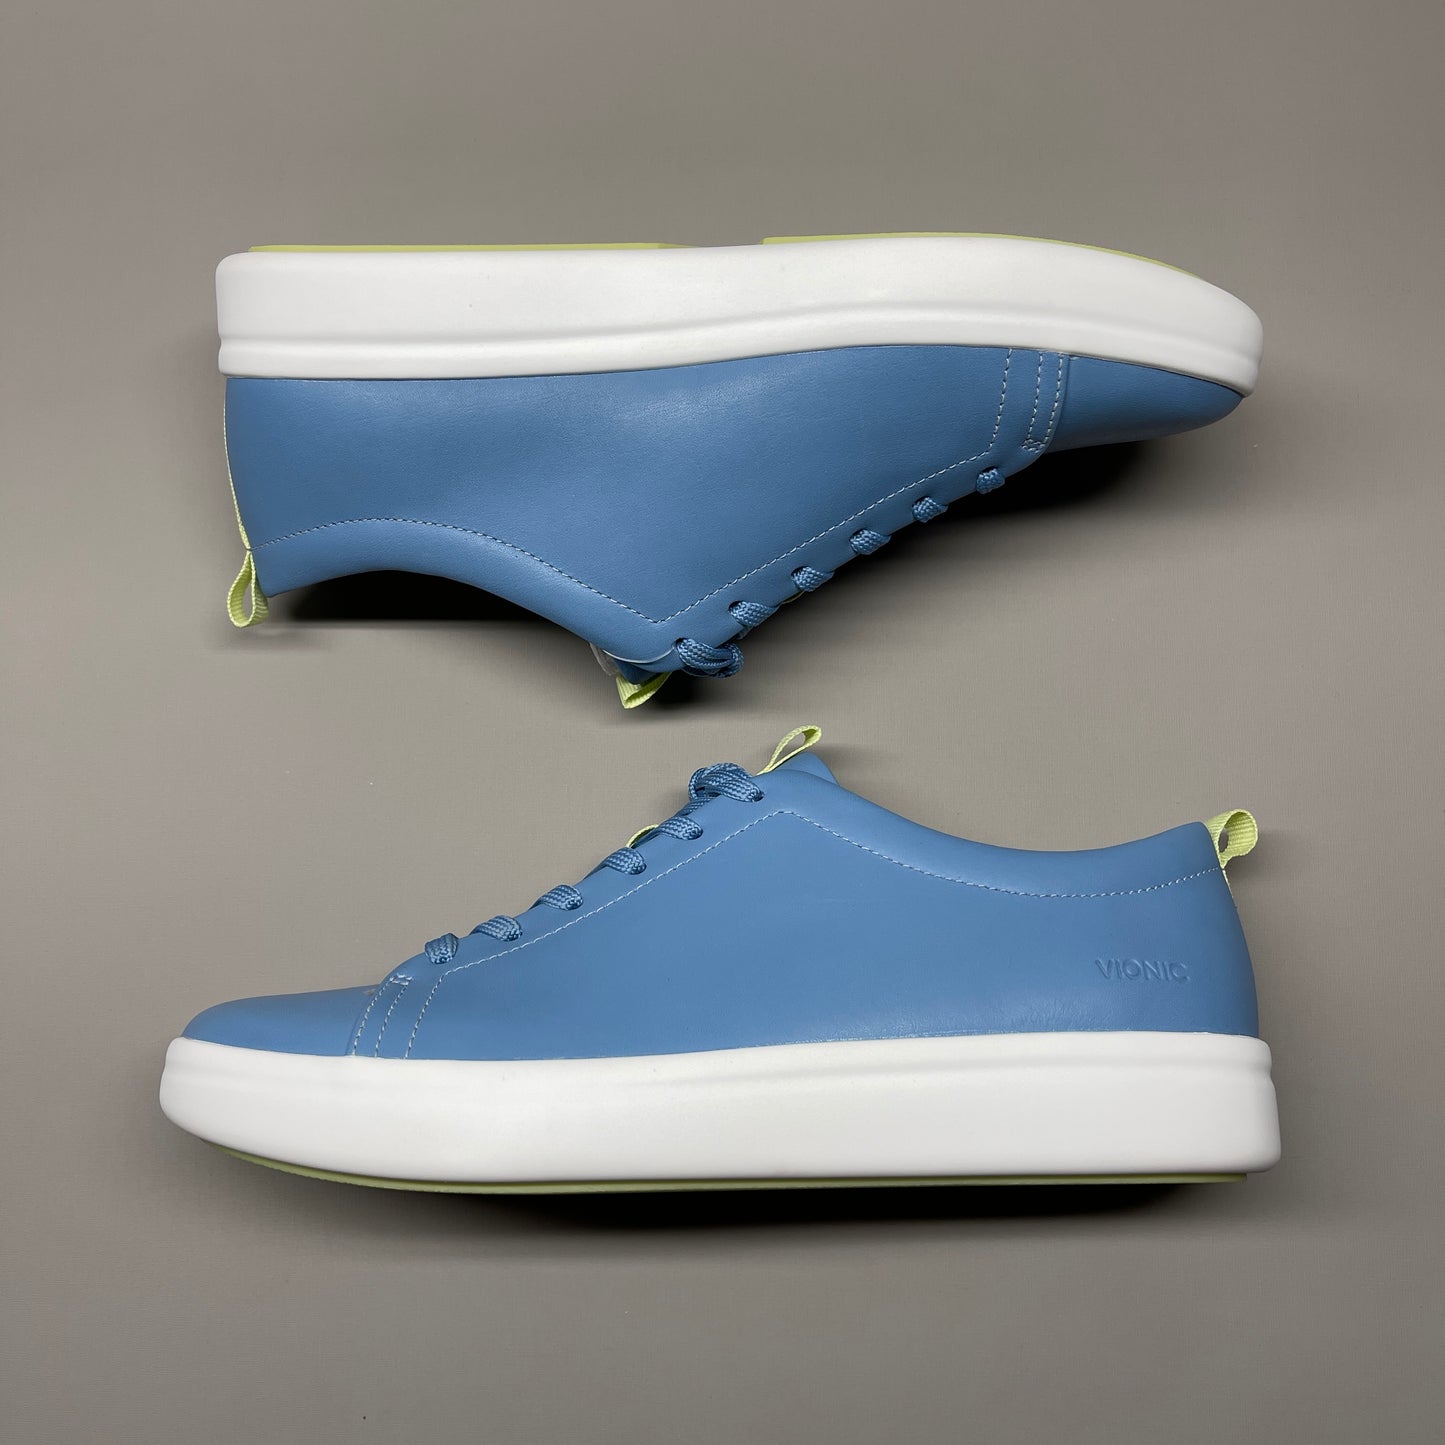 VIONIC Paisley Leather Shoe Women's SZ 6.5 Sky Blue (New)